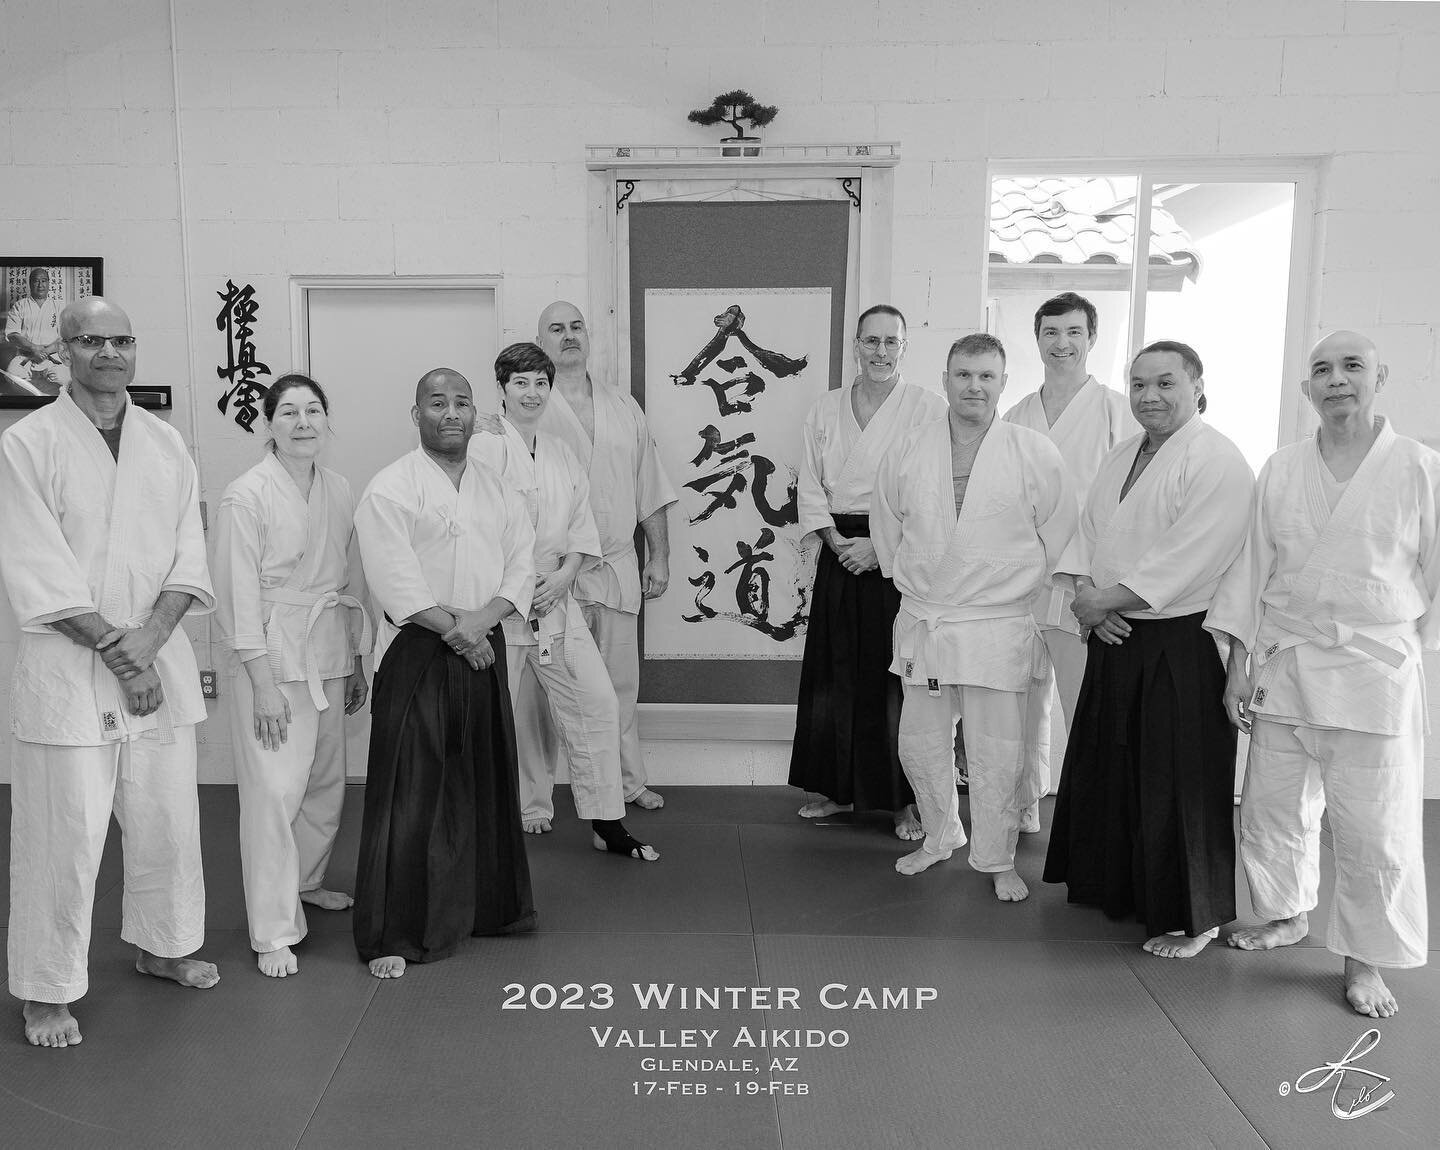 Group photo from our Winter Camp in @valleyaikidoaz - all classes were led by Asim Hanif Sensei, 5th Dan 

#aikido #budo #martialarts #training #exercise  #improveveryday #potomacaikikai #capitalaikidofederation
#arizona